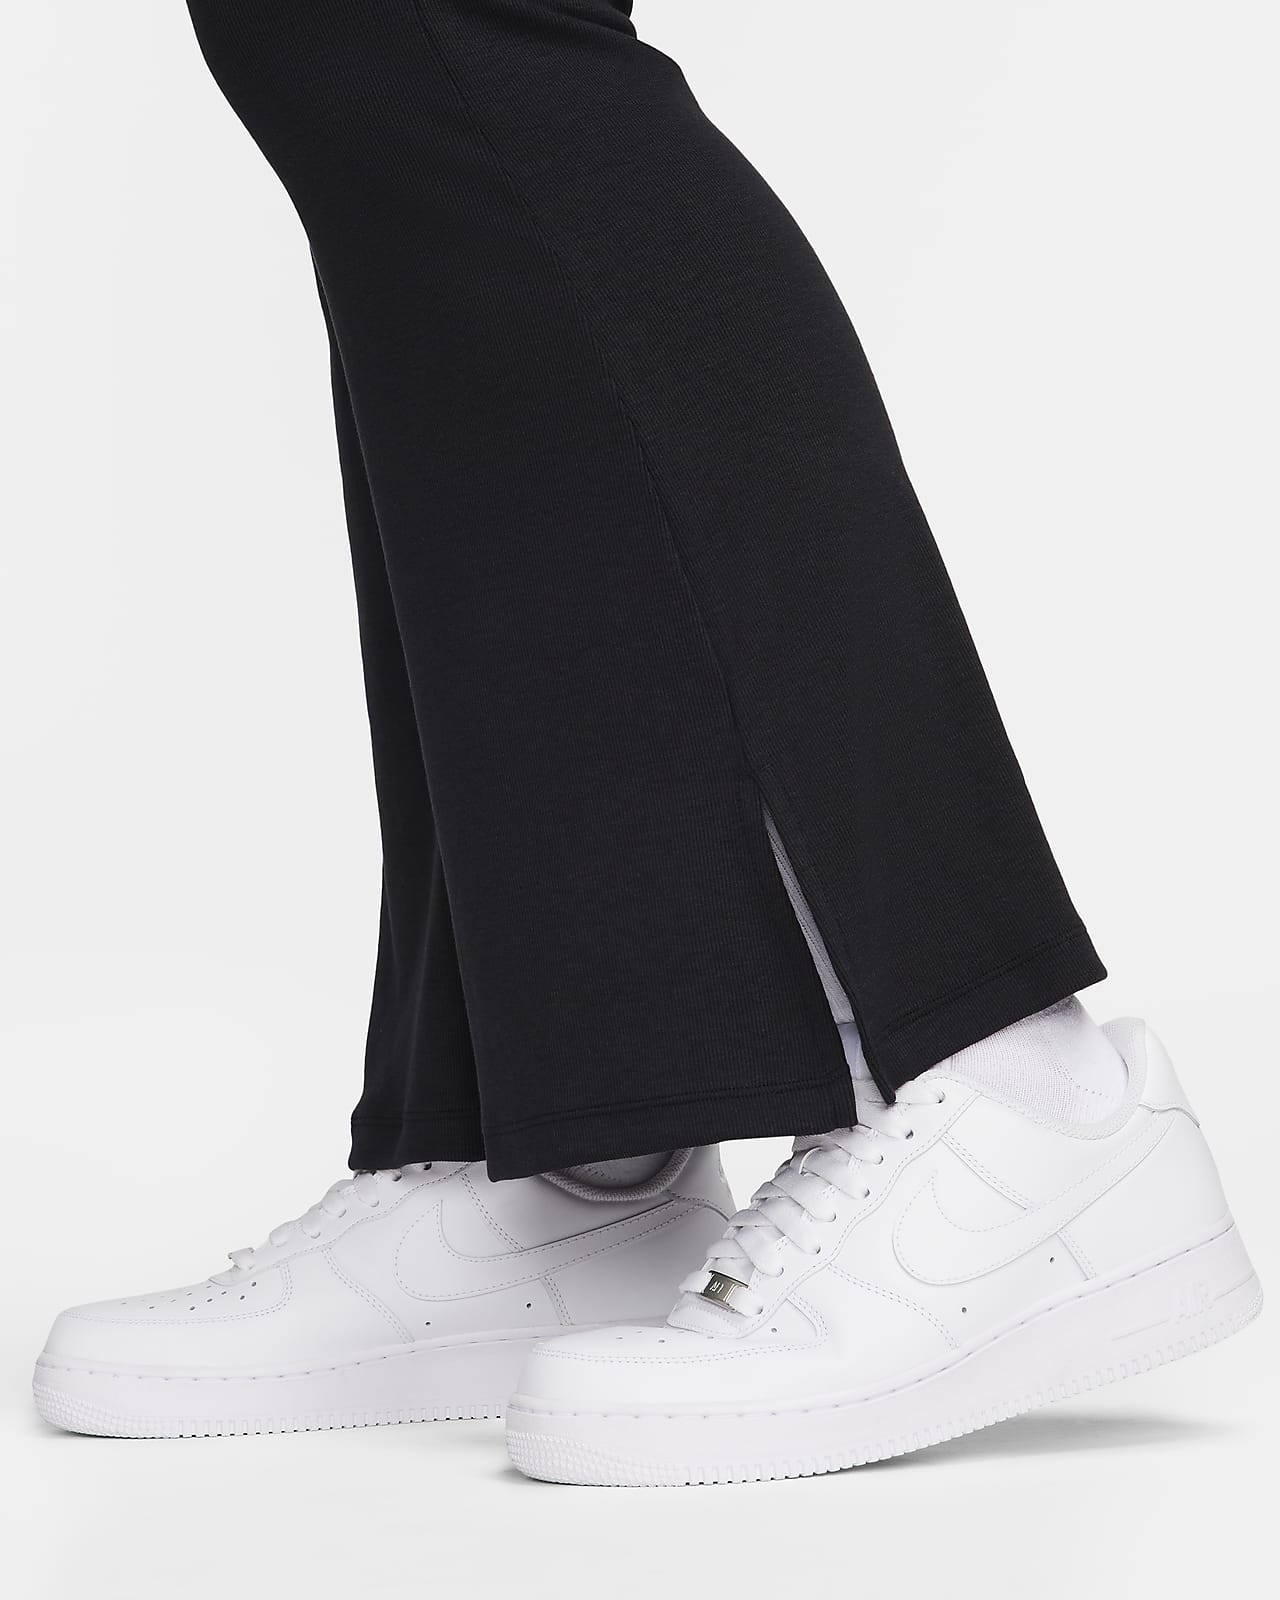 Nike Sportswear Club Women's Leggings Overbranded Stretchy Knit